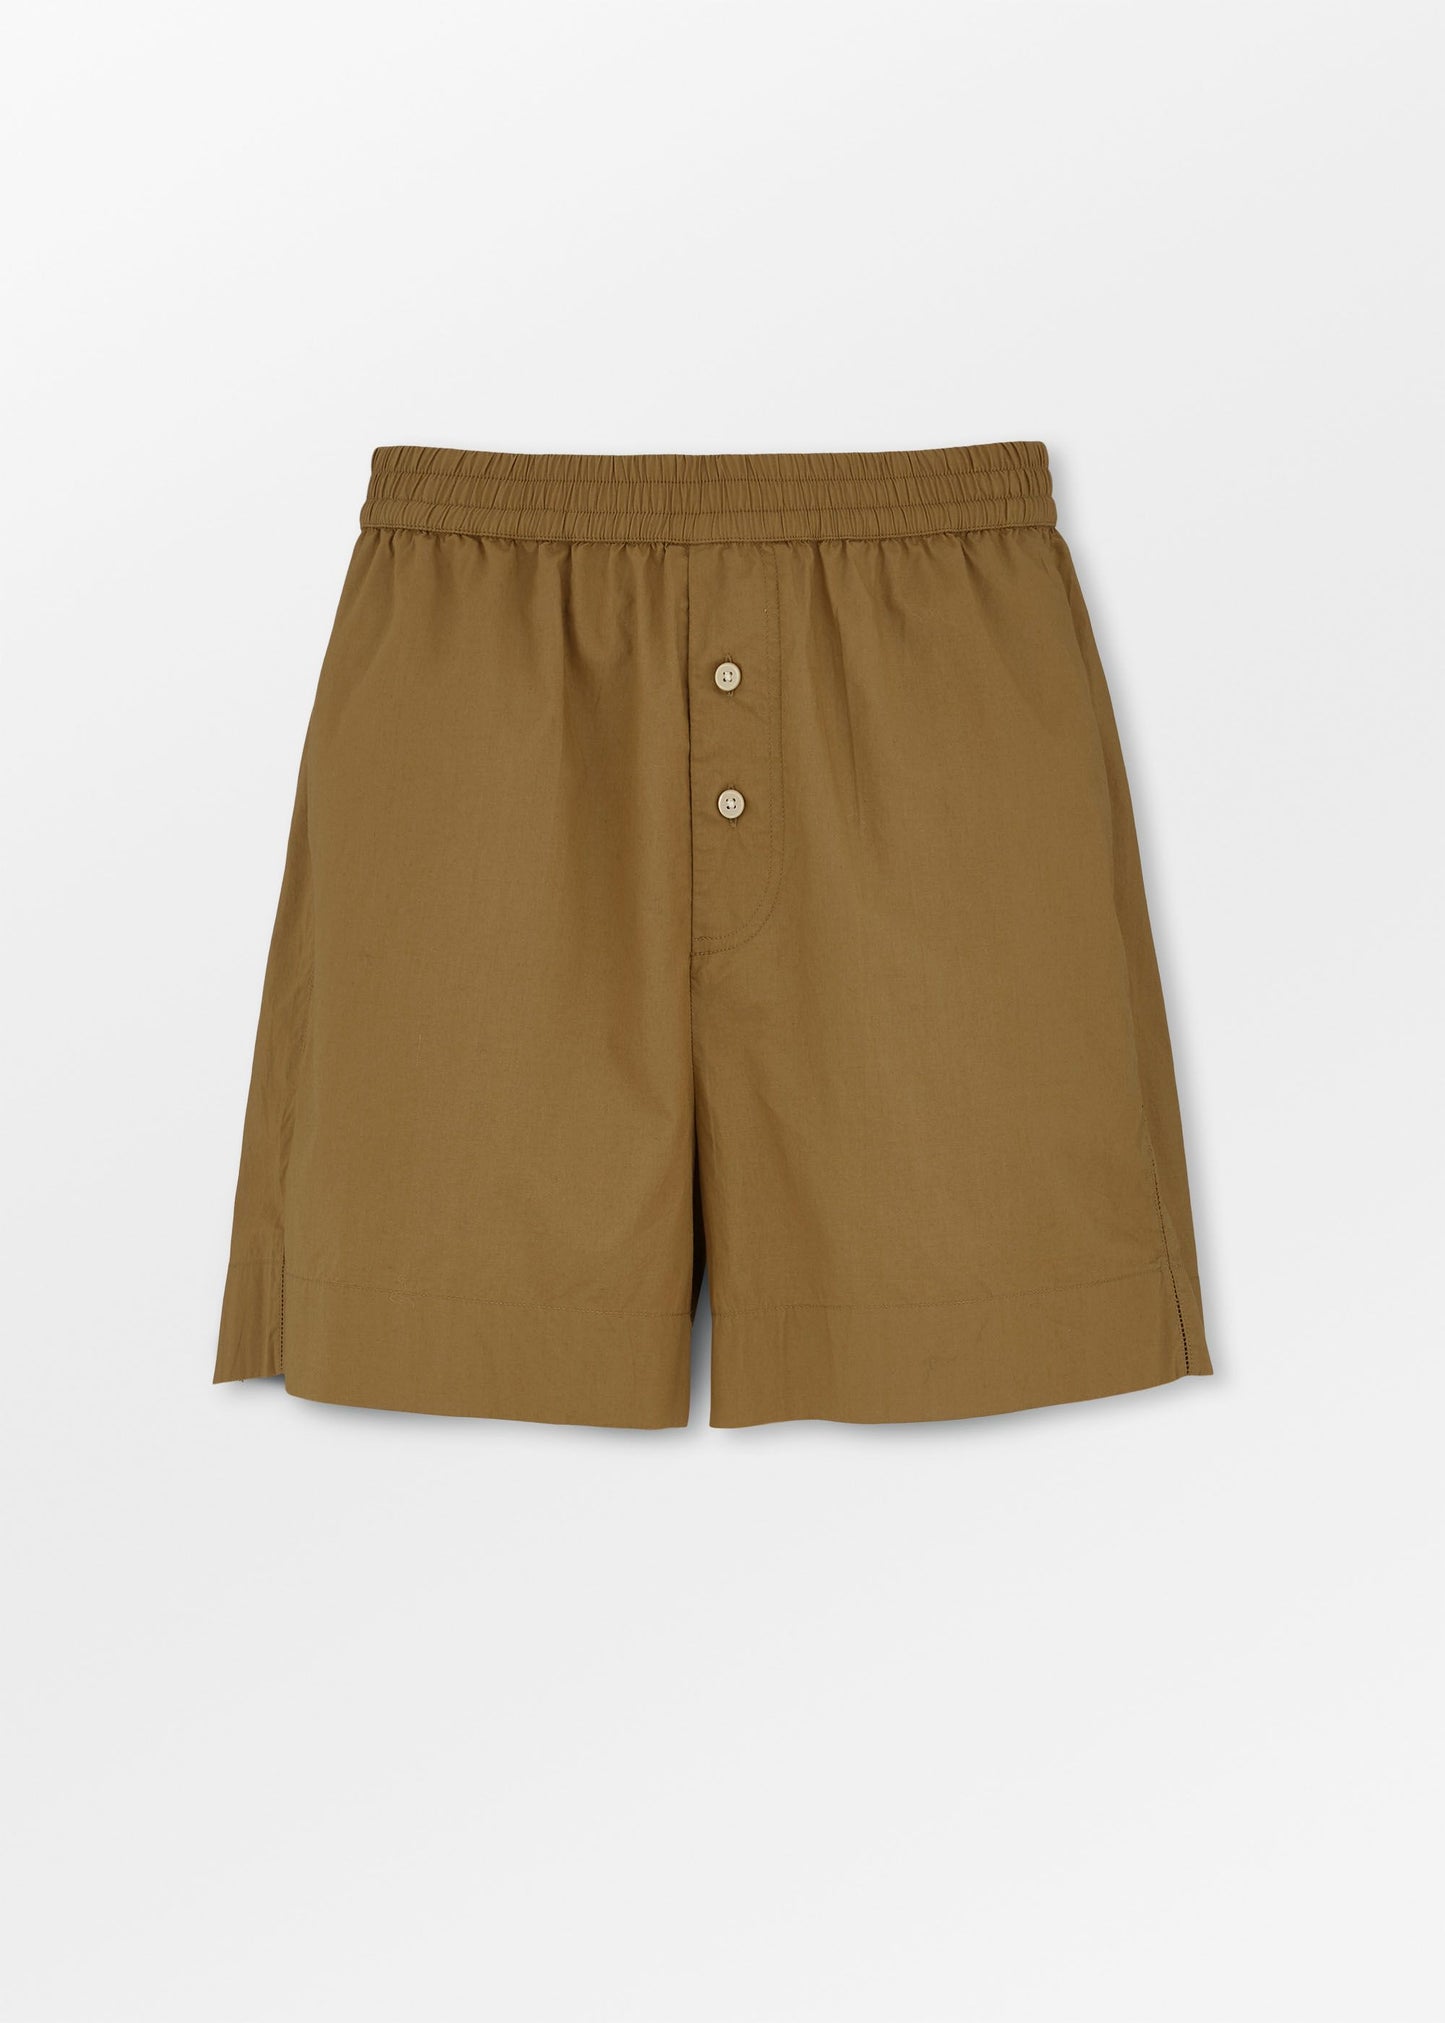 Aiayu "Casual Shorts" Cinnamon